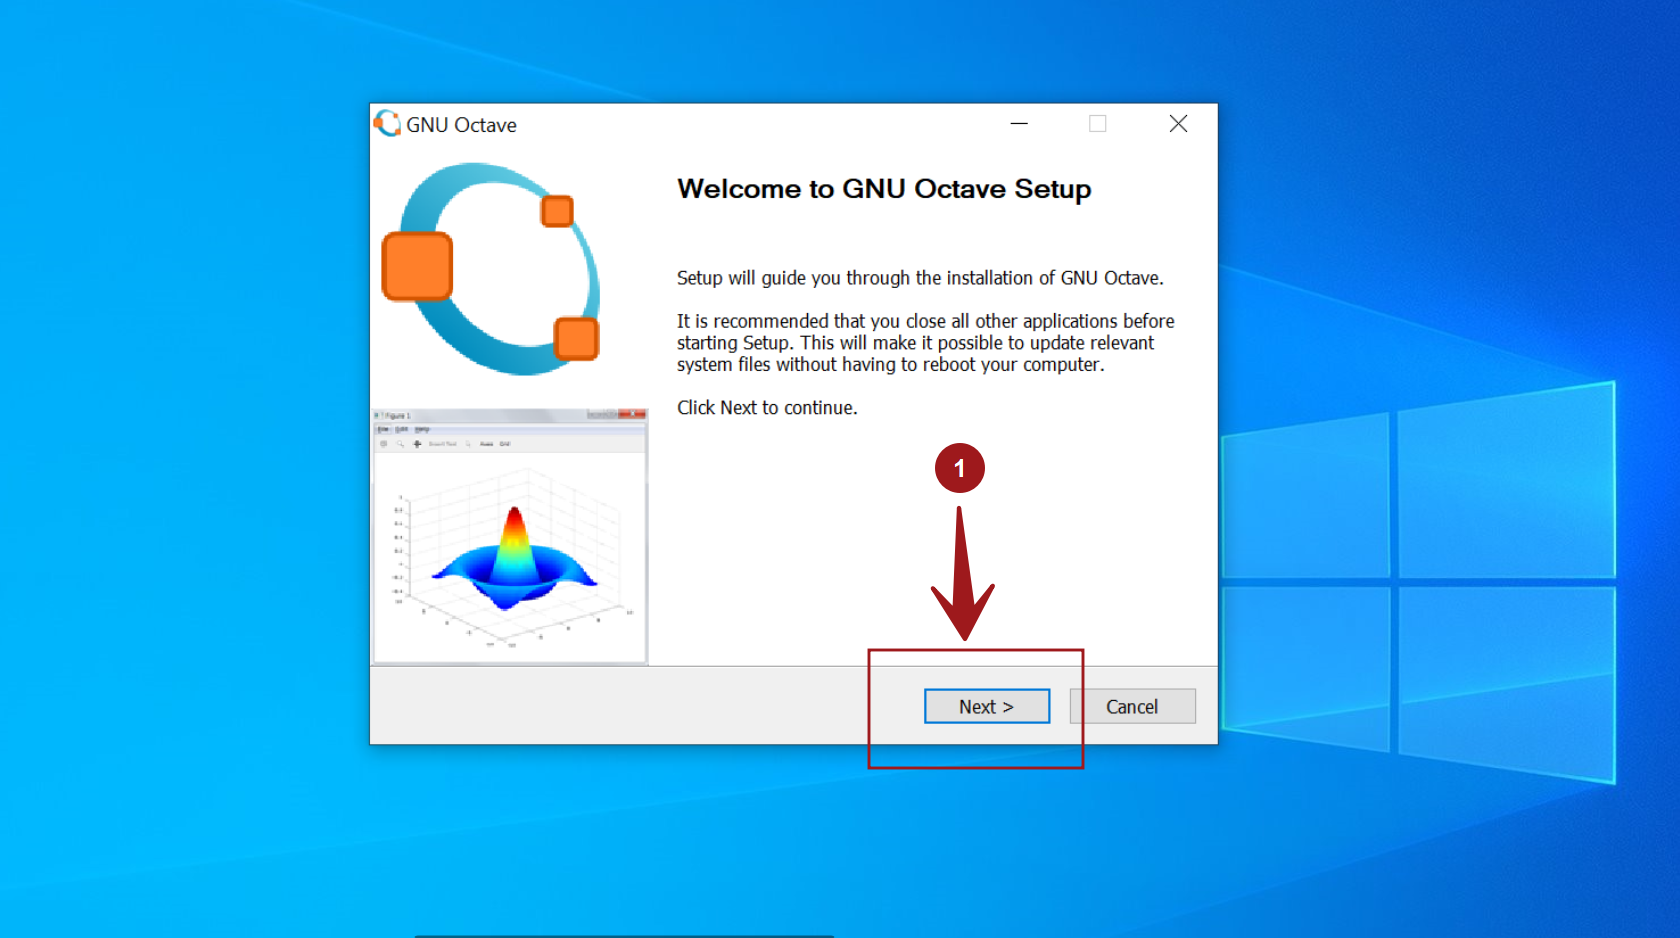 GNU Octave Setup Welcome Screen